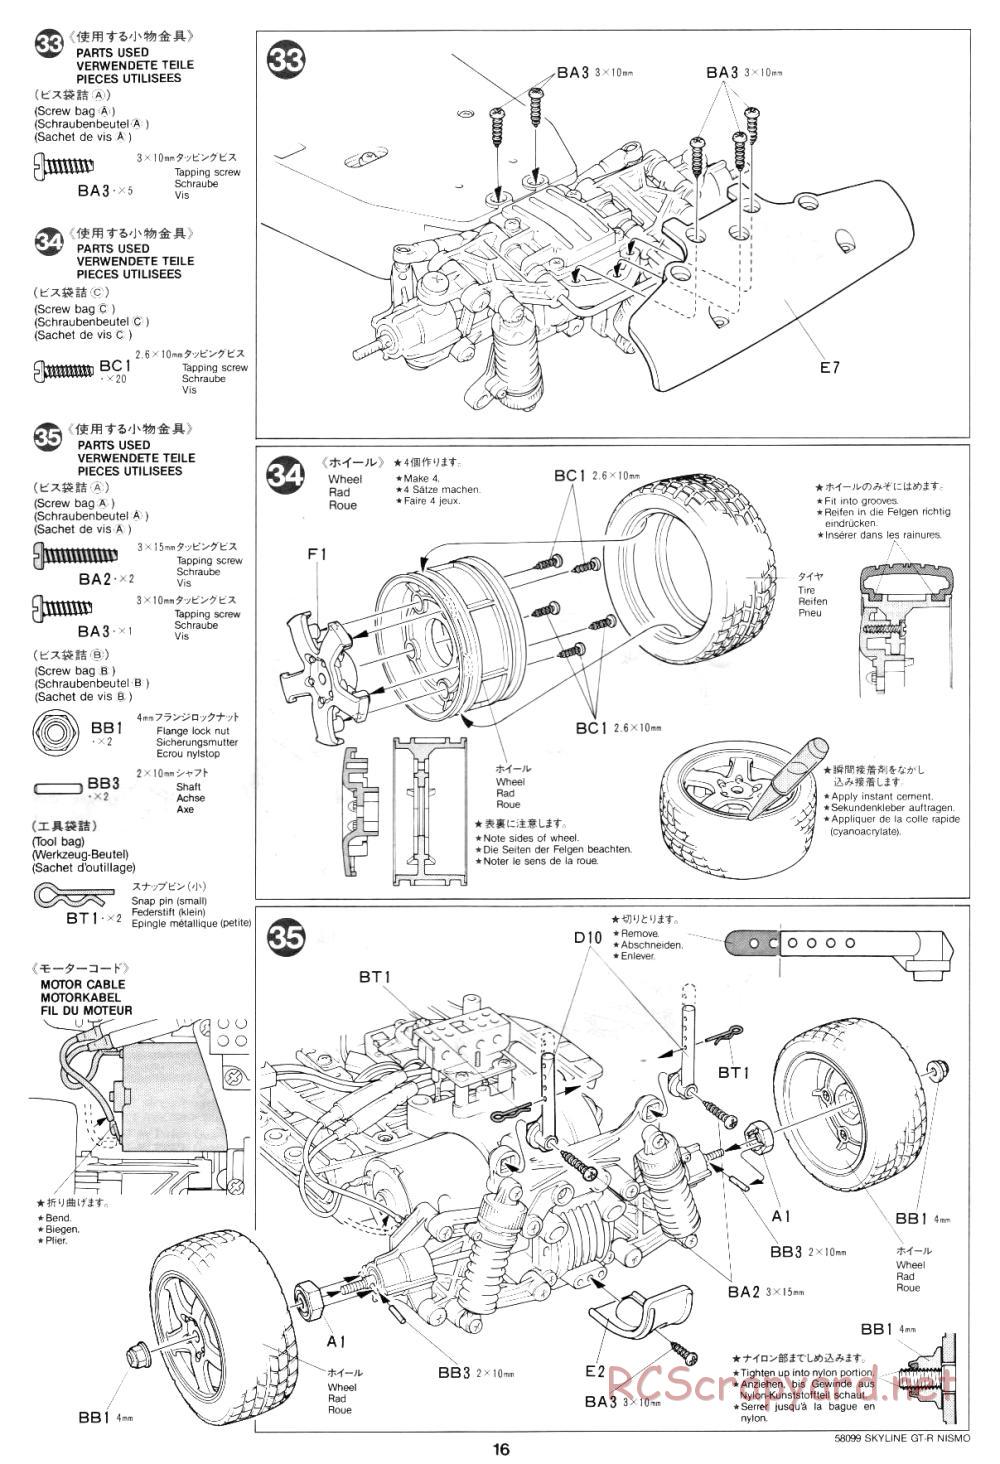 Tamiya - Nissan Skyline GT-R Nismo - 58099 - Manual - Page 16